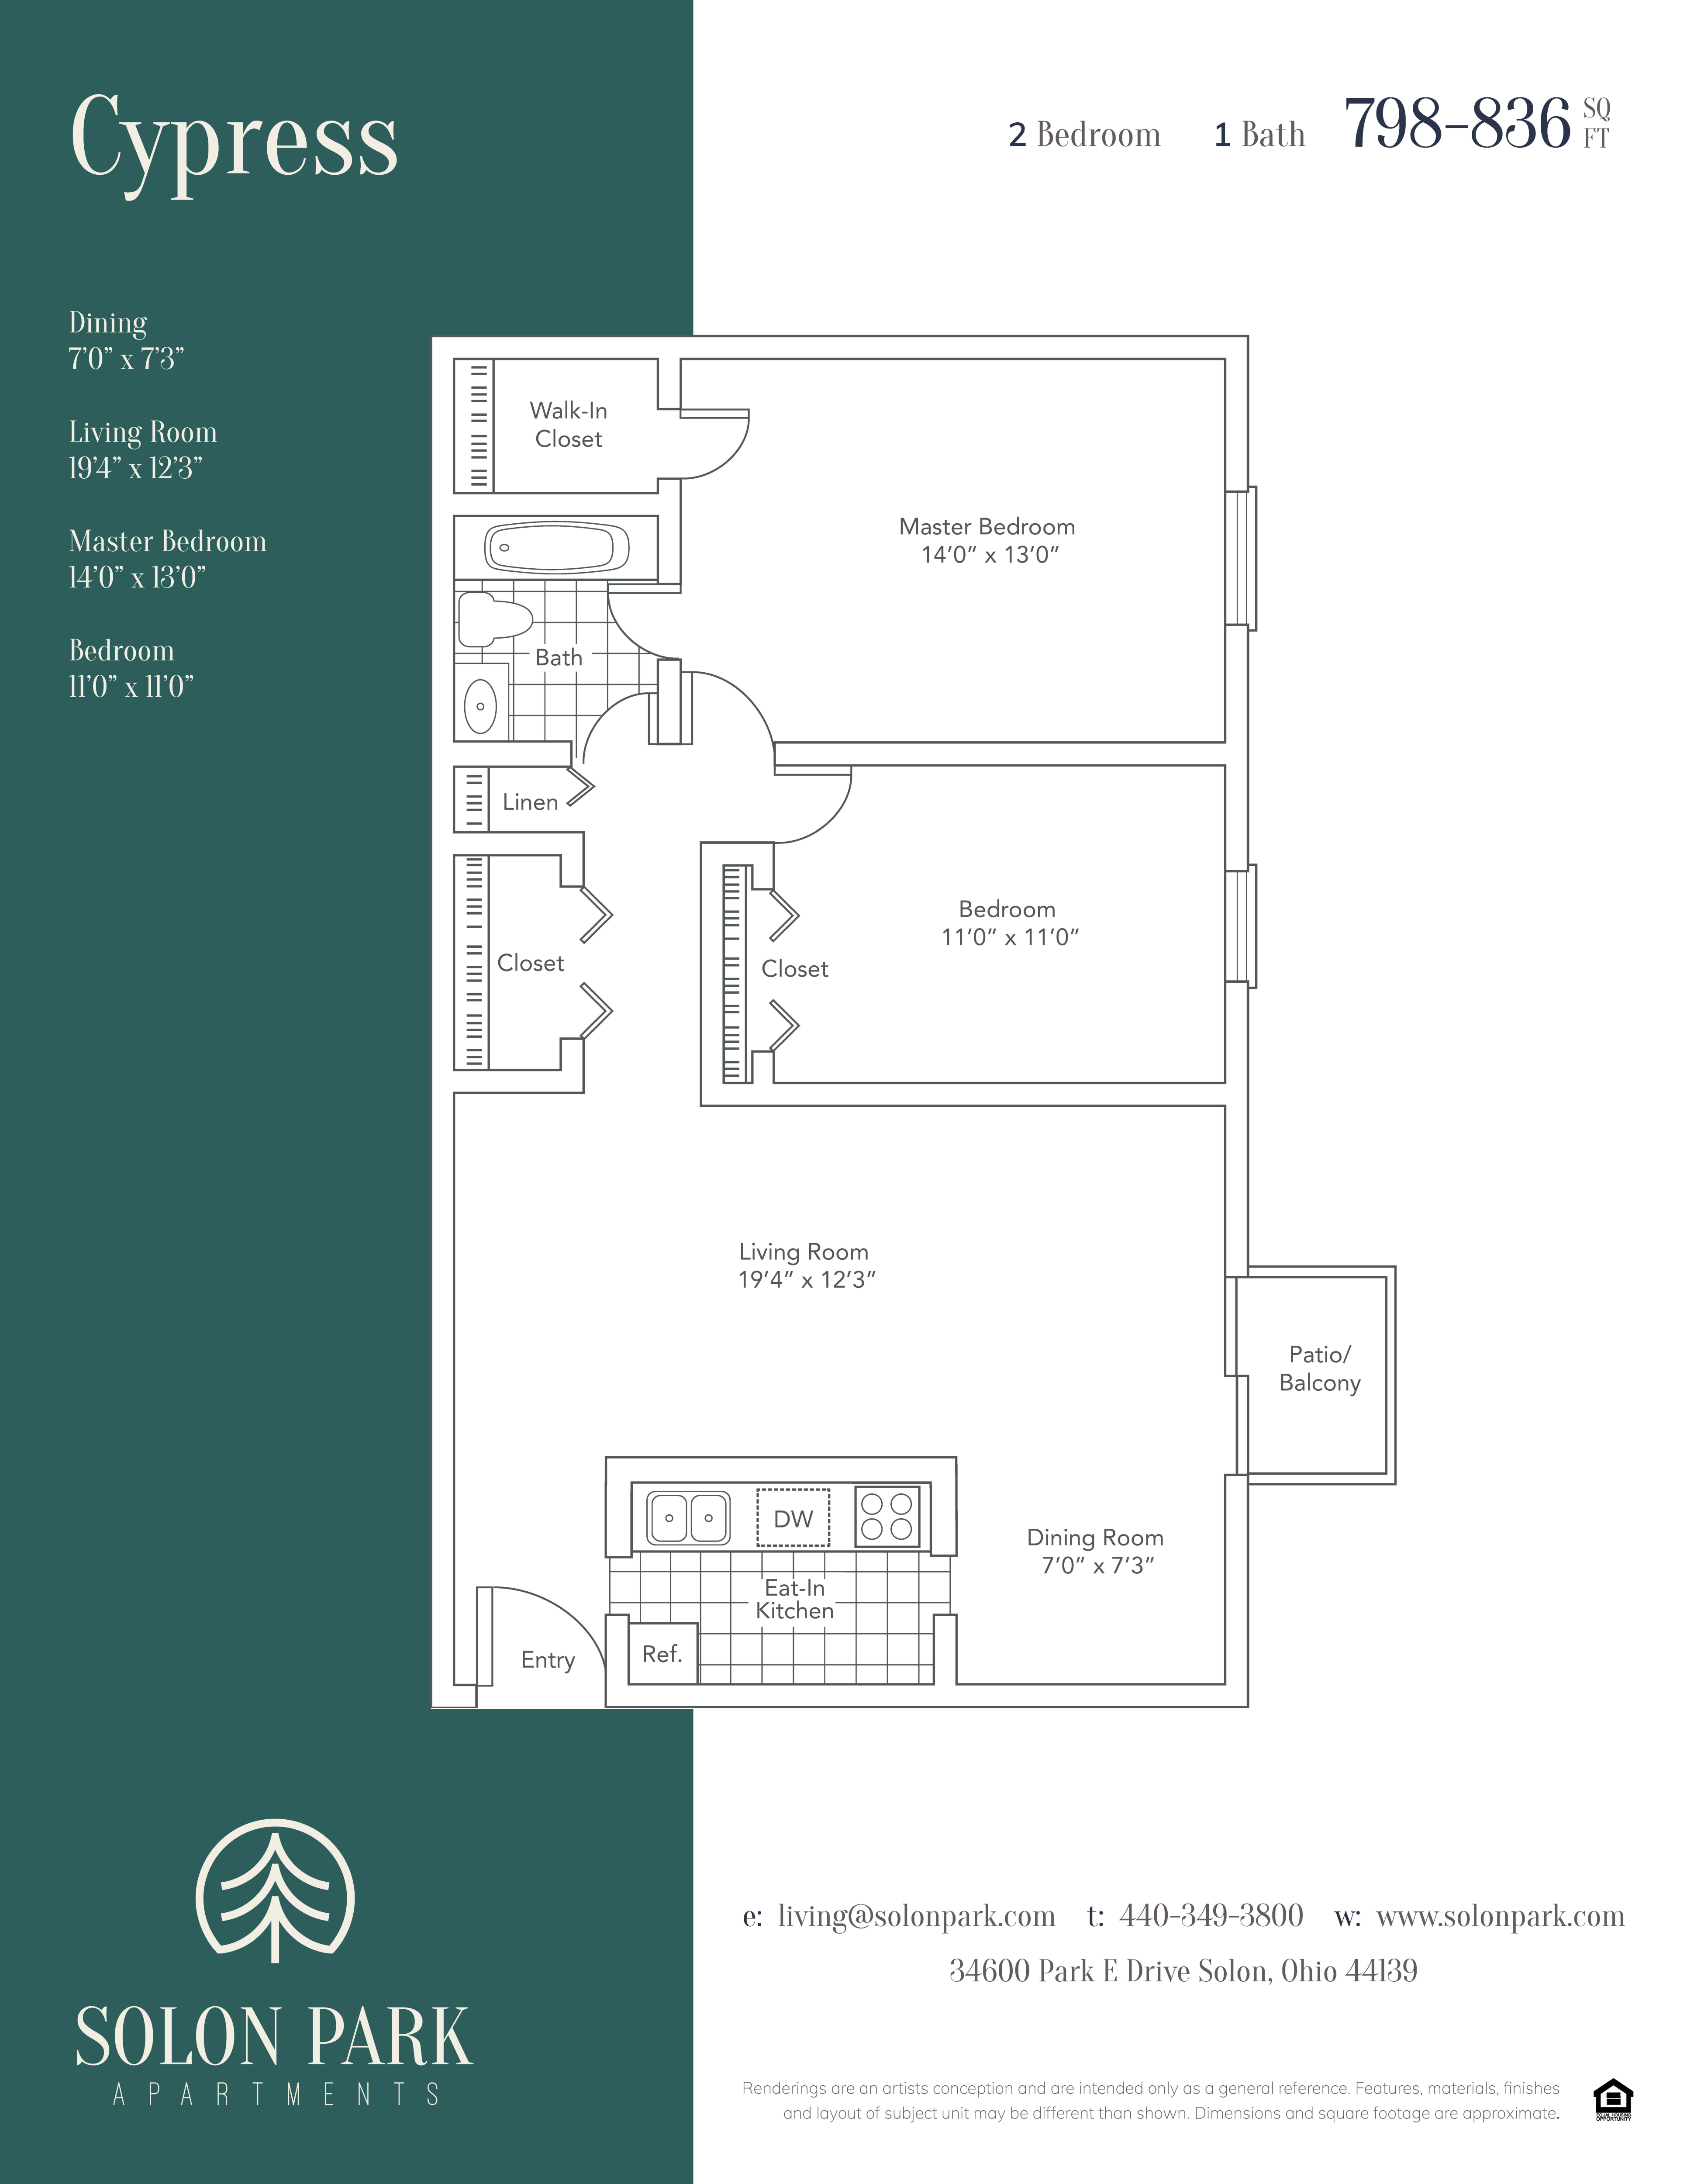 Solon Park Floorplan Sheet Cypress.jpg